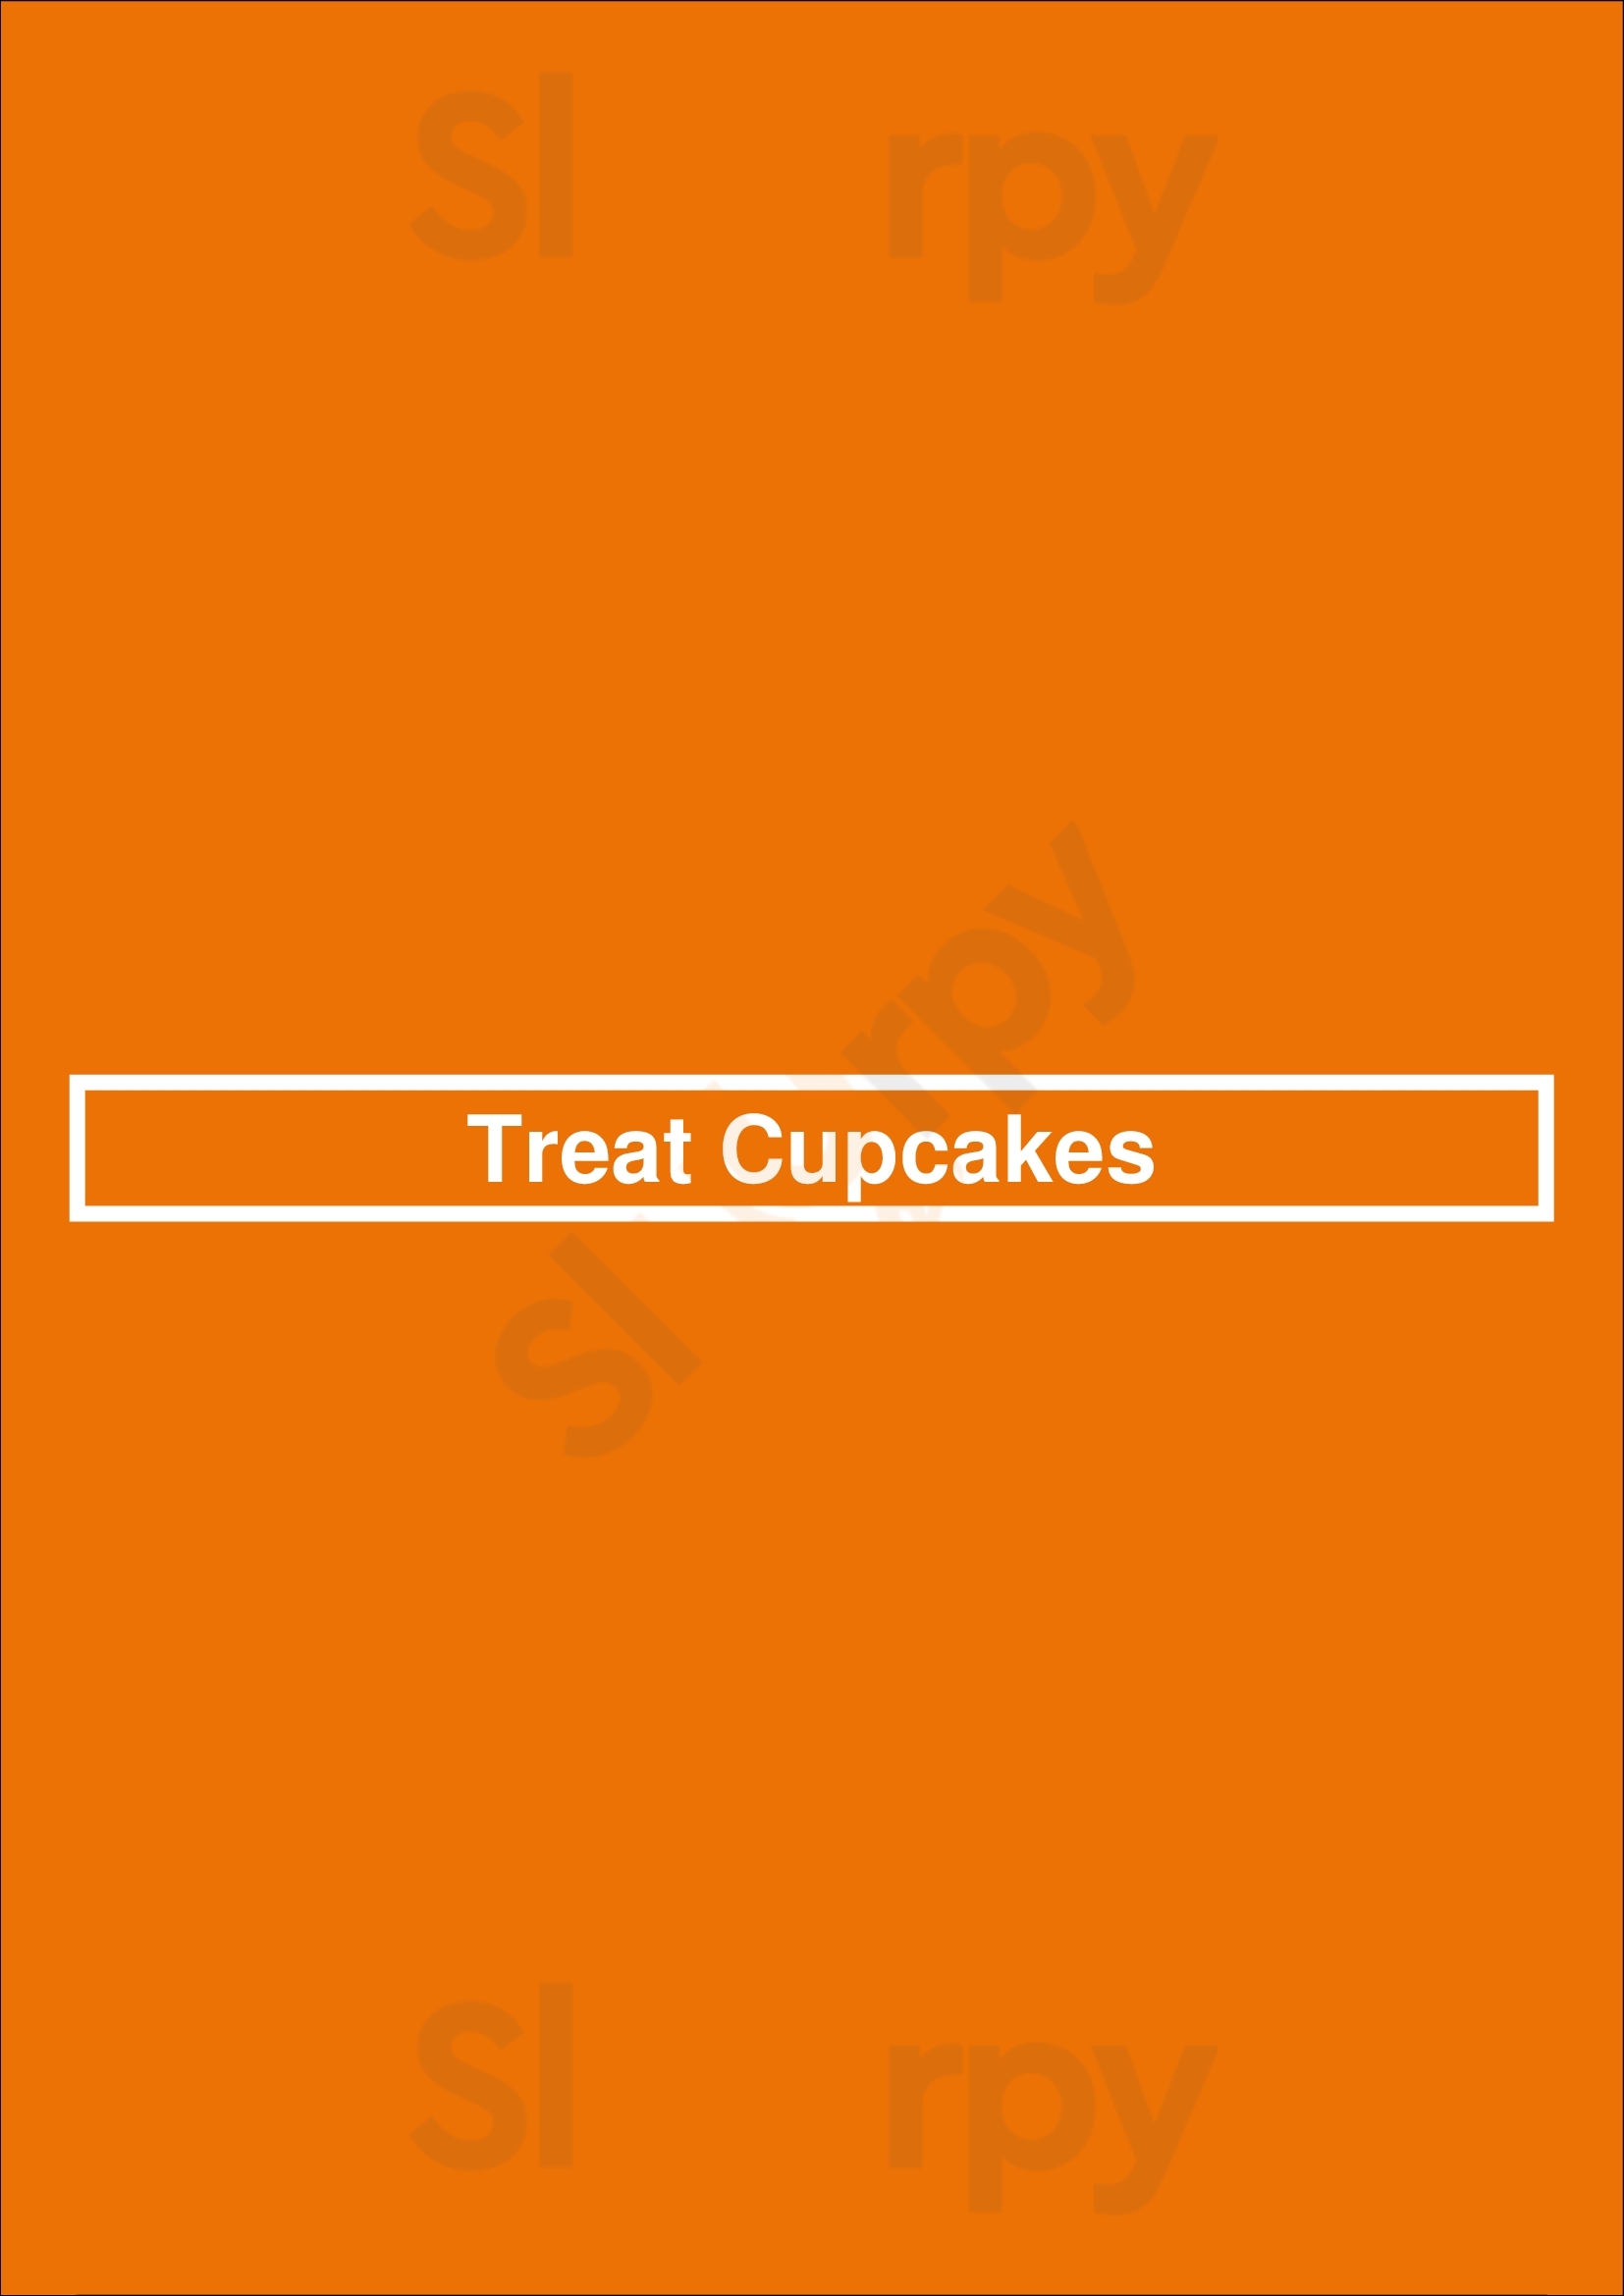 Treat Cupcakes Houston Menu - 1